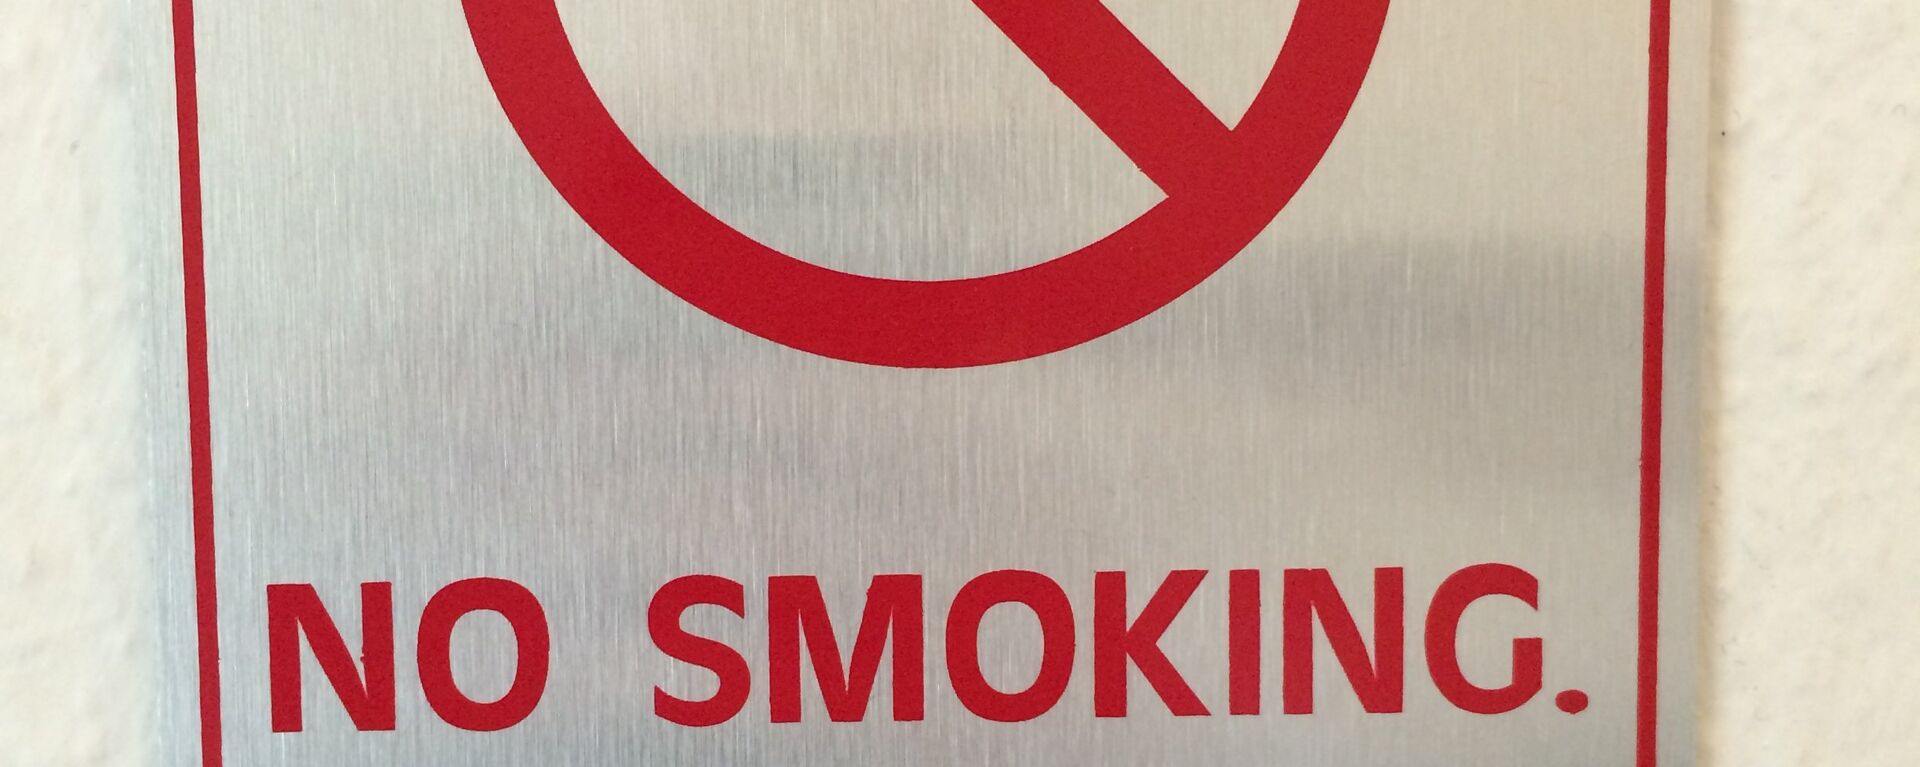 No Smoking sign - Sputnik International, 1920, 24.12.2022